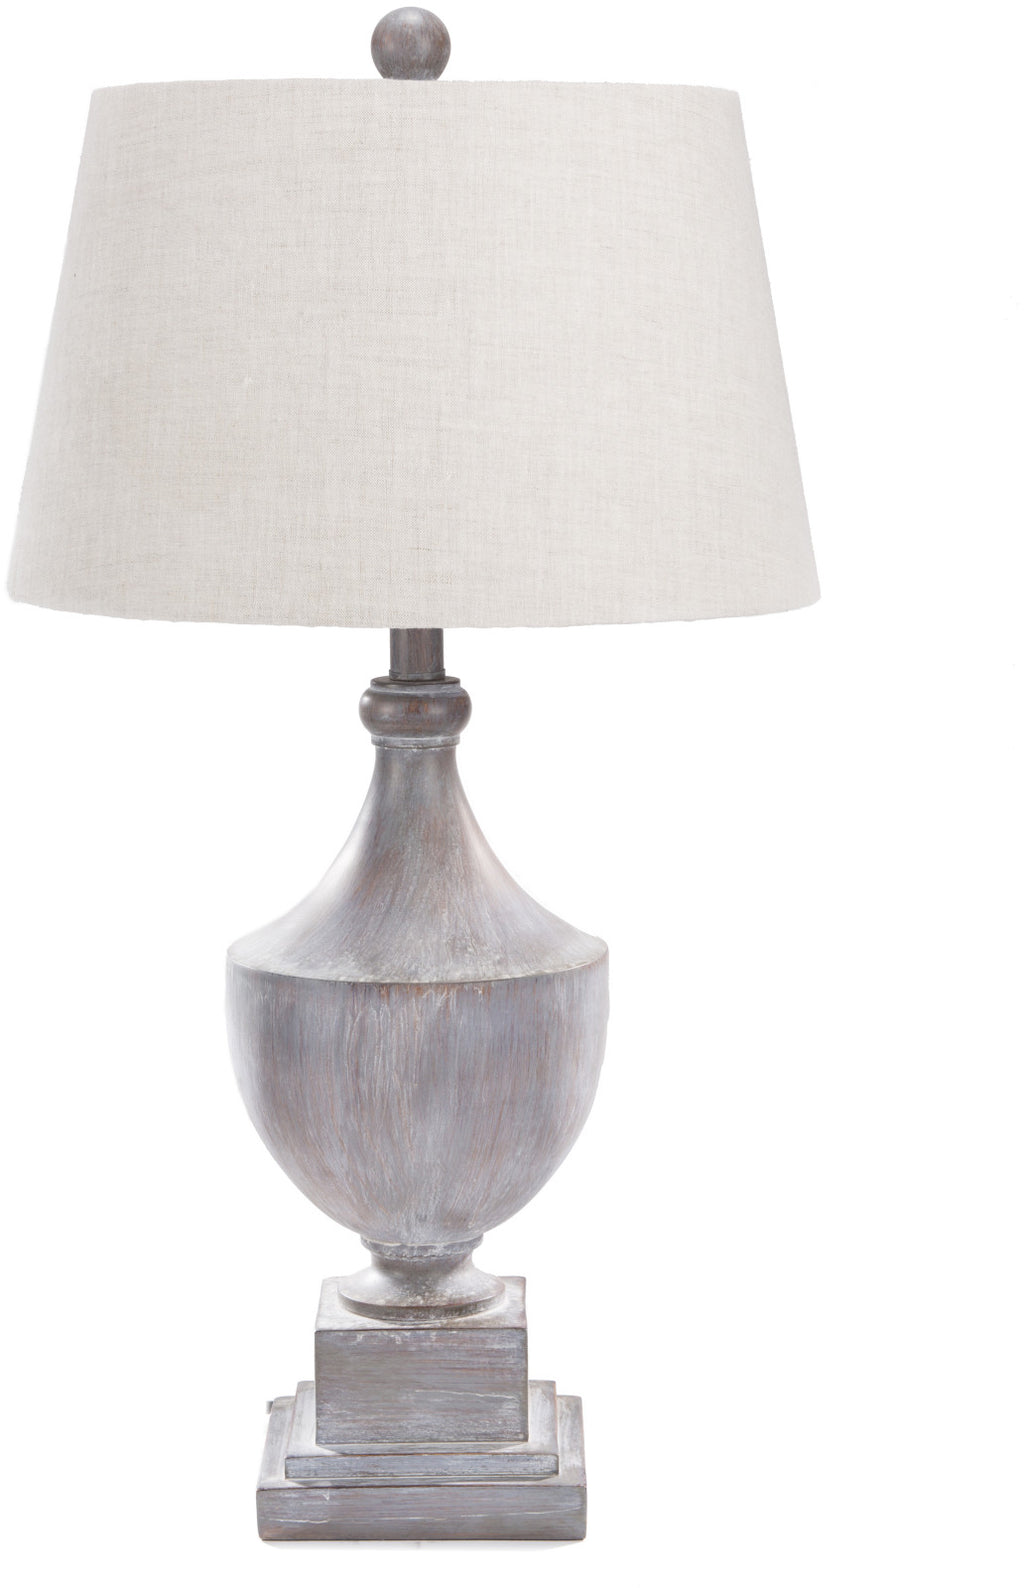 Surya Eleanor ERLP-002 Oatmeal Lamp Table Lamp